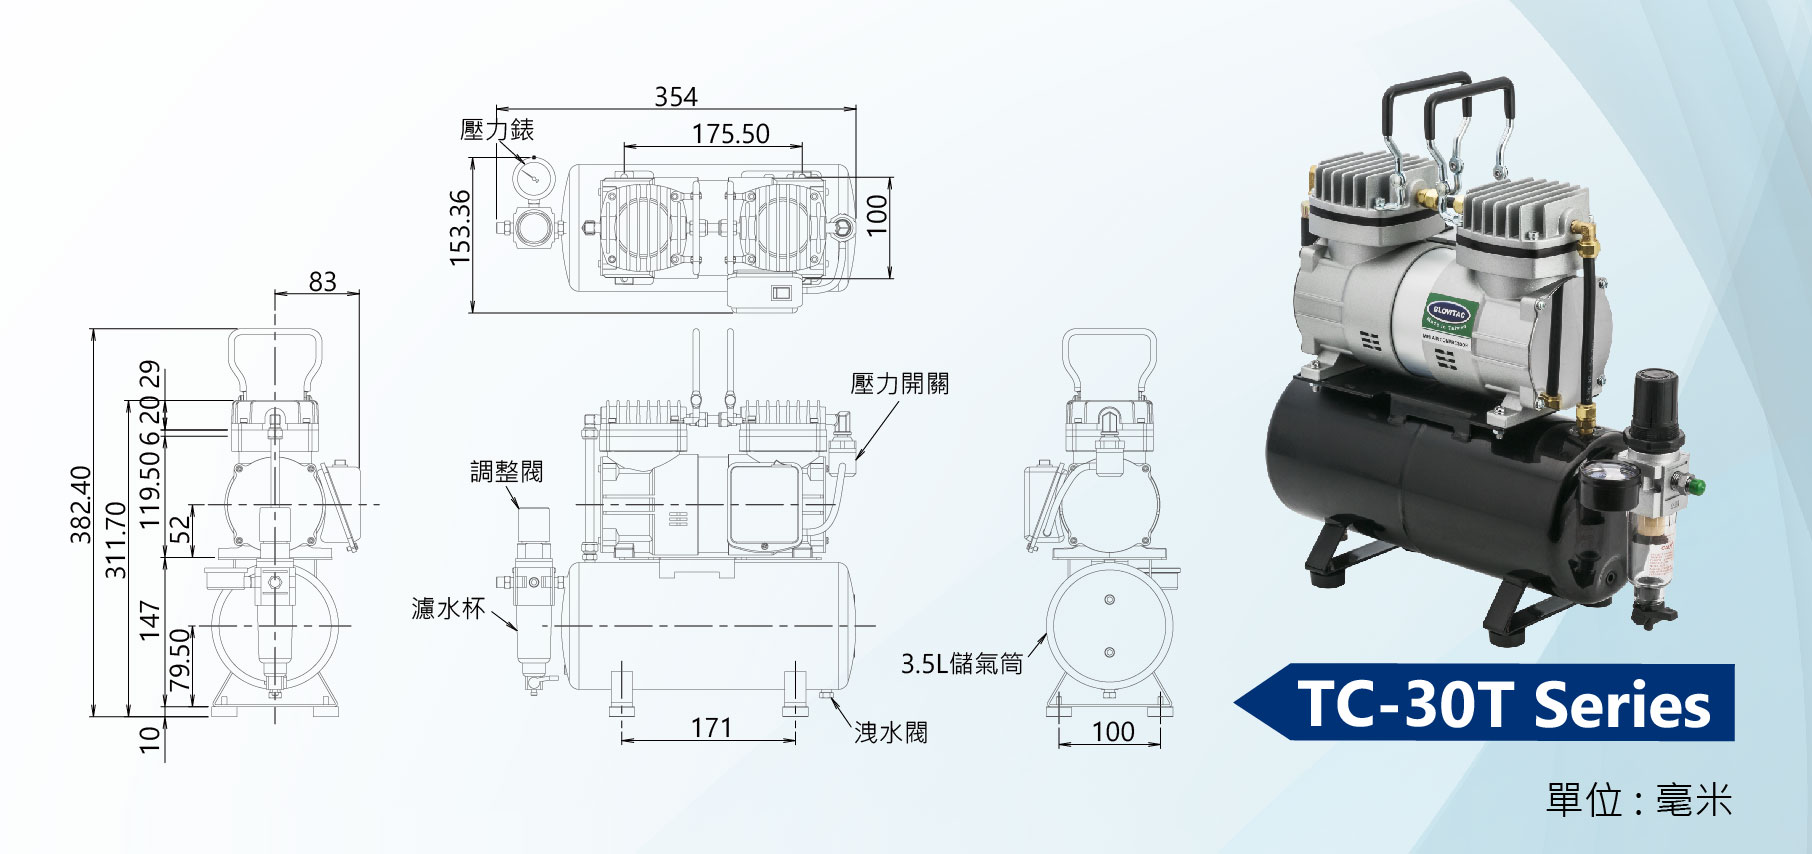 TC-30T Series Mini Air Compressors Dimension